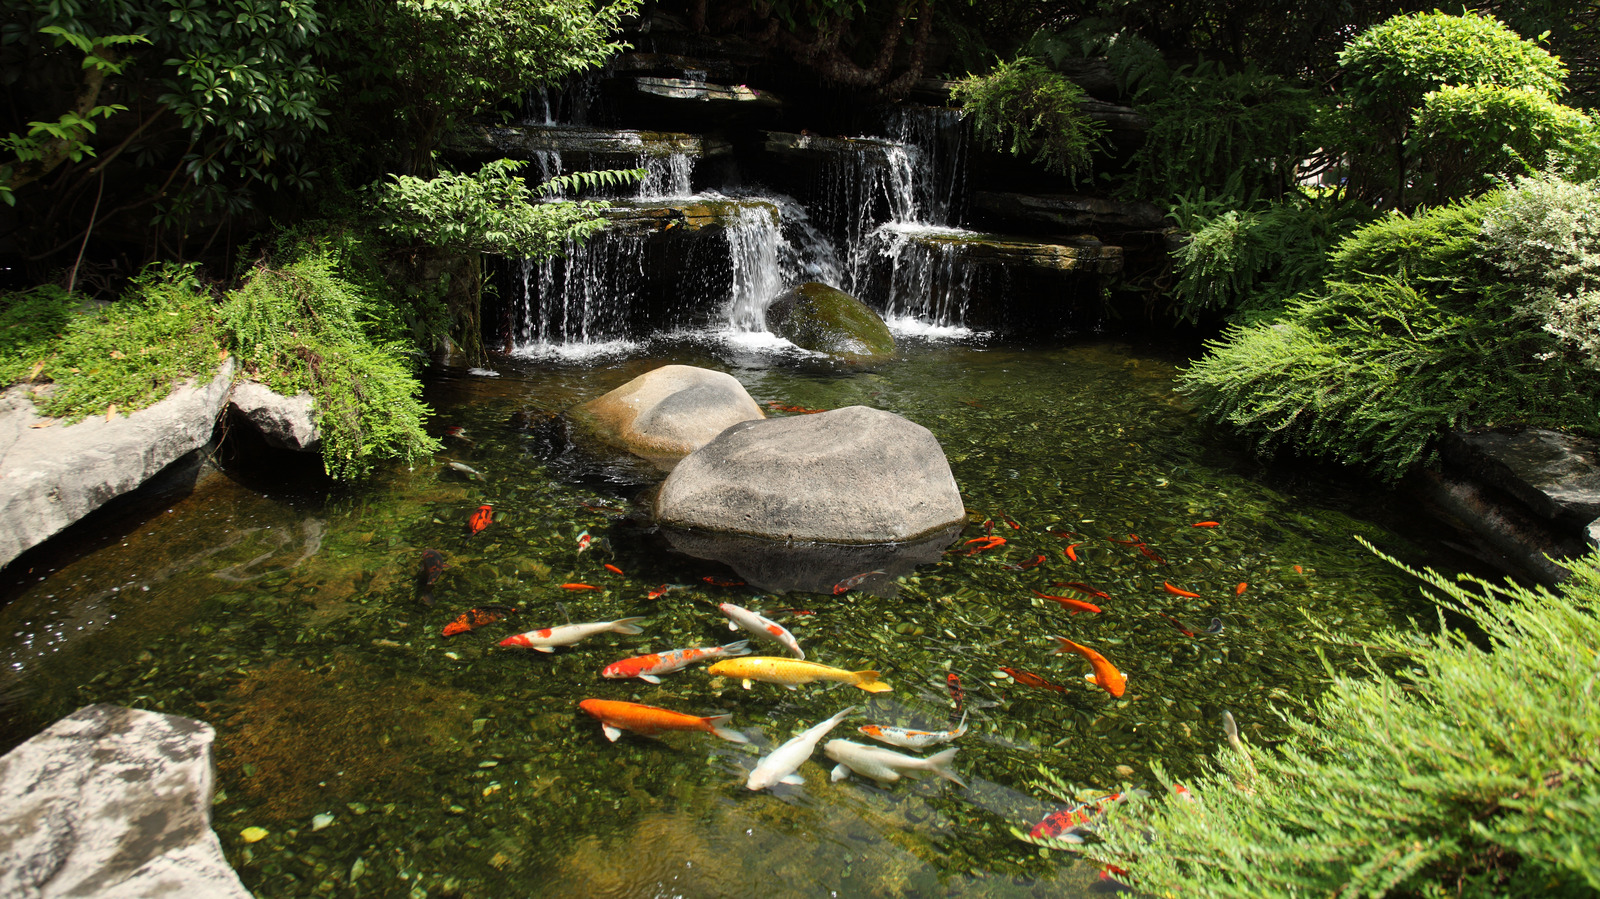 modern koi fish pond